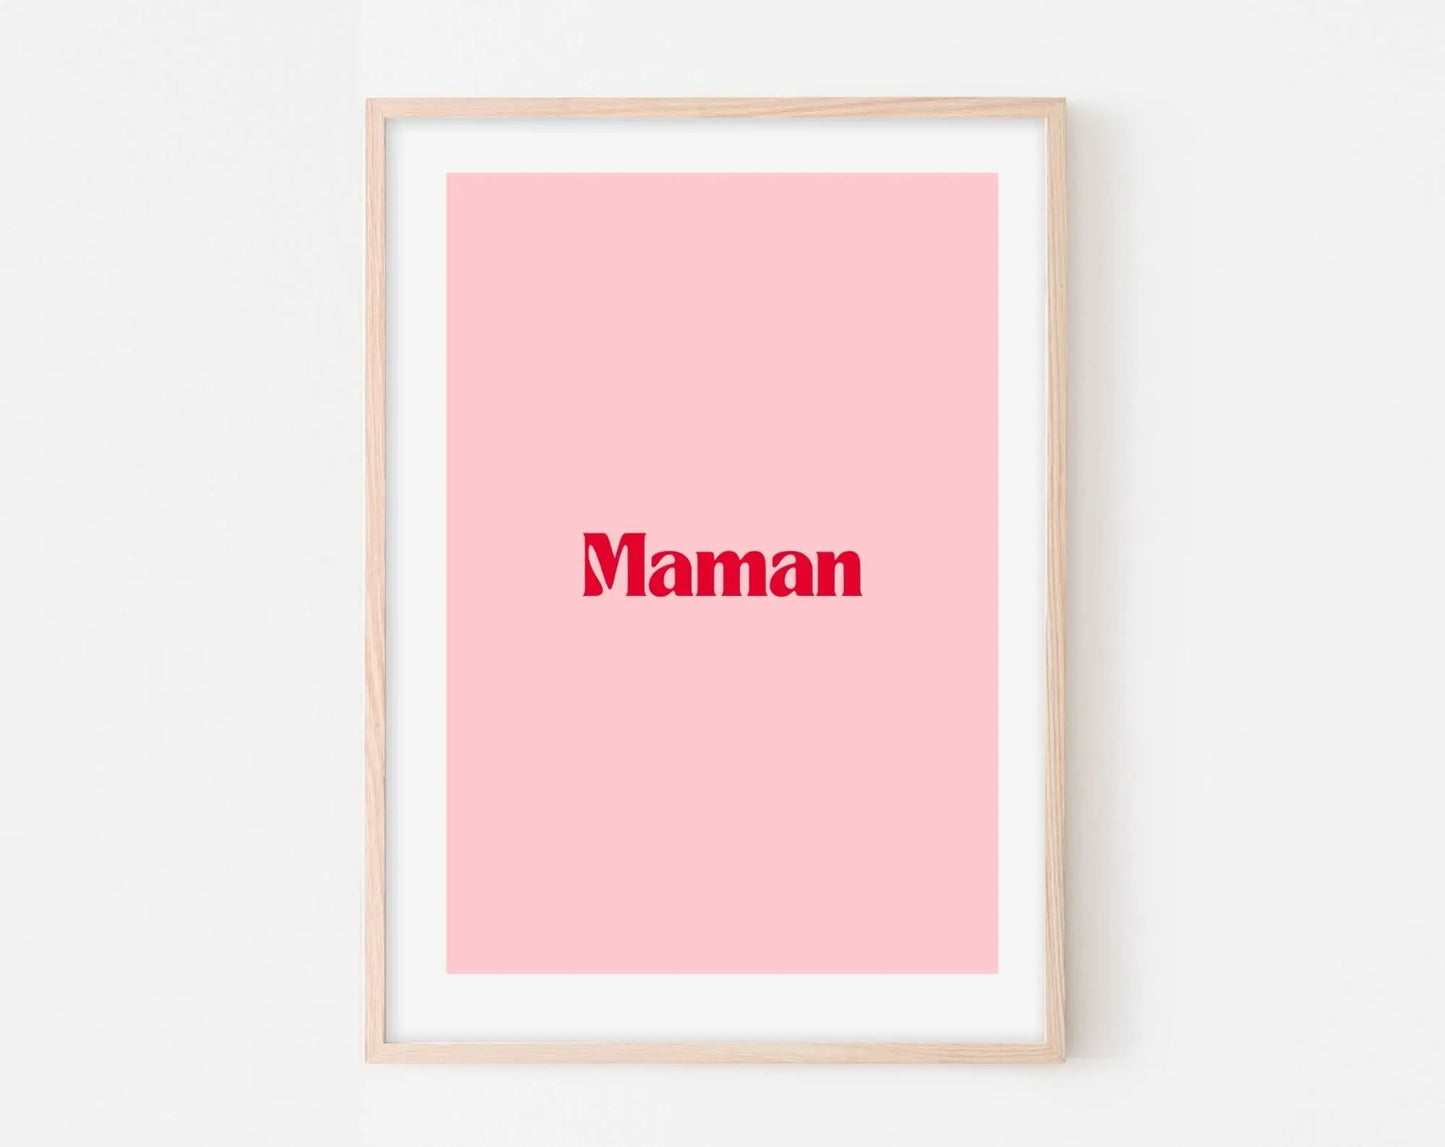 Affiche Maman - Affiche citation rose - Pink affiche  - Poster à imprimer FLTMfrance